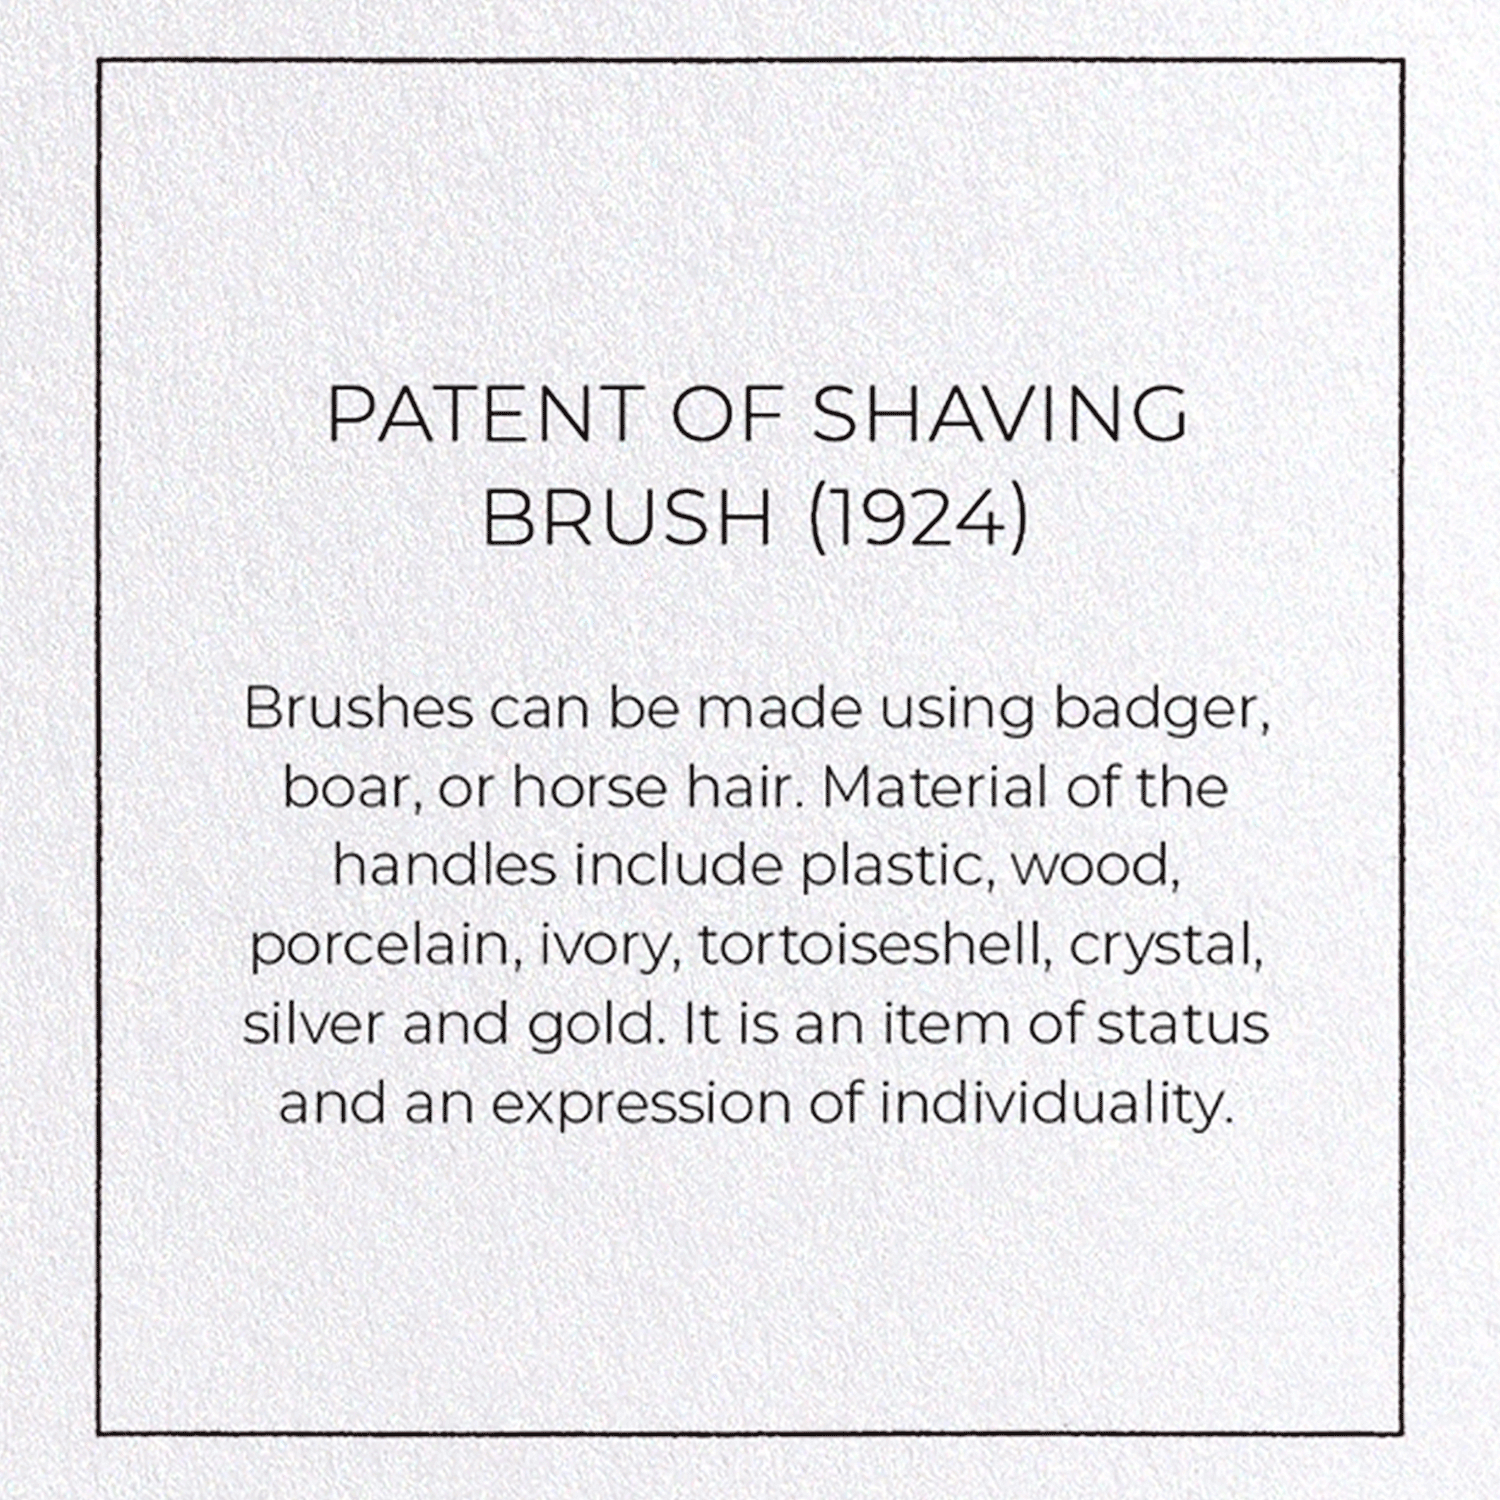 PATENT OF SHAVING BRUSH (1924)